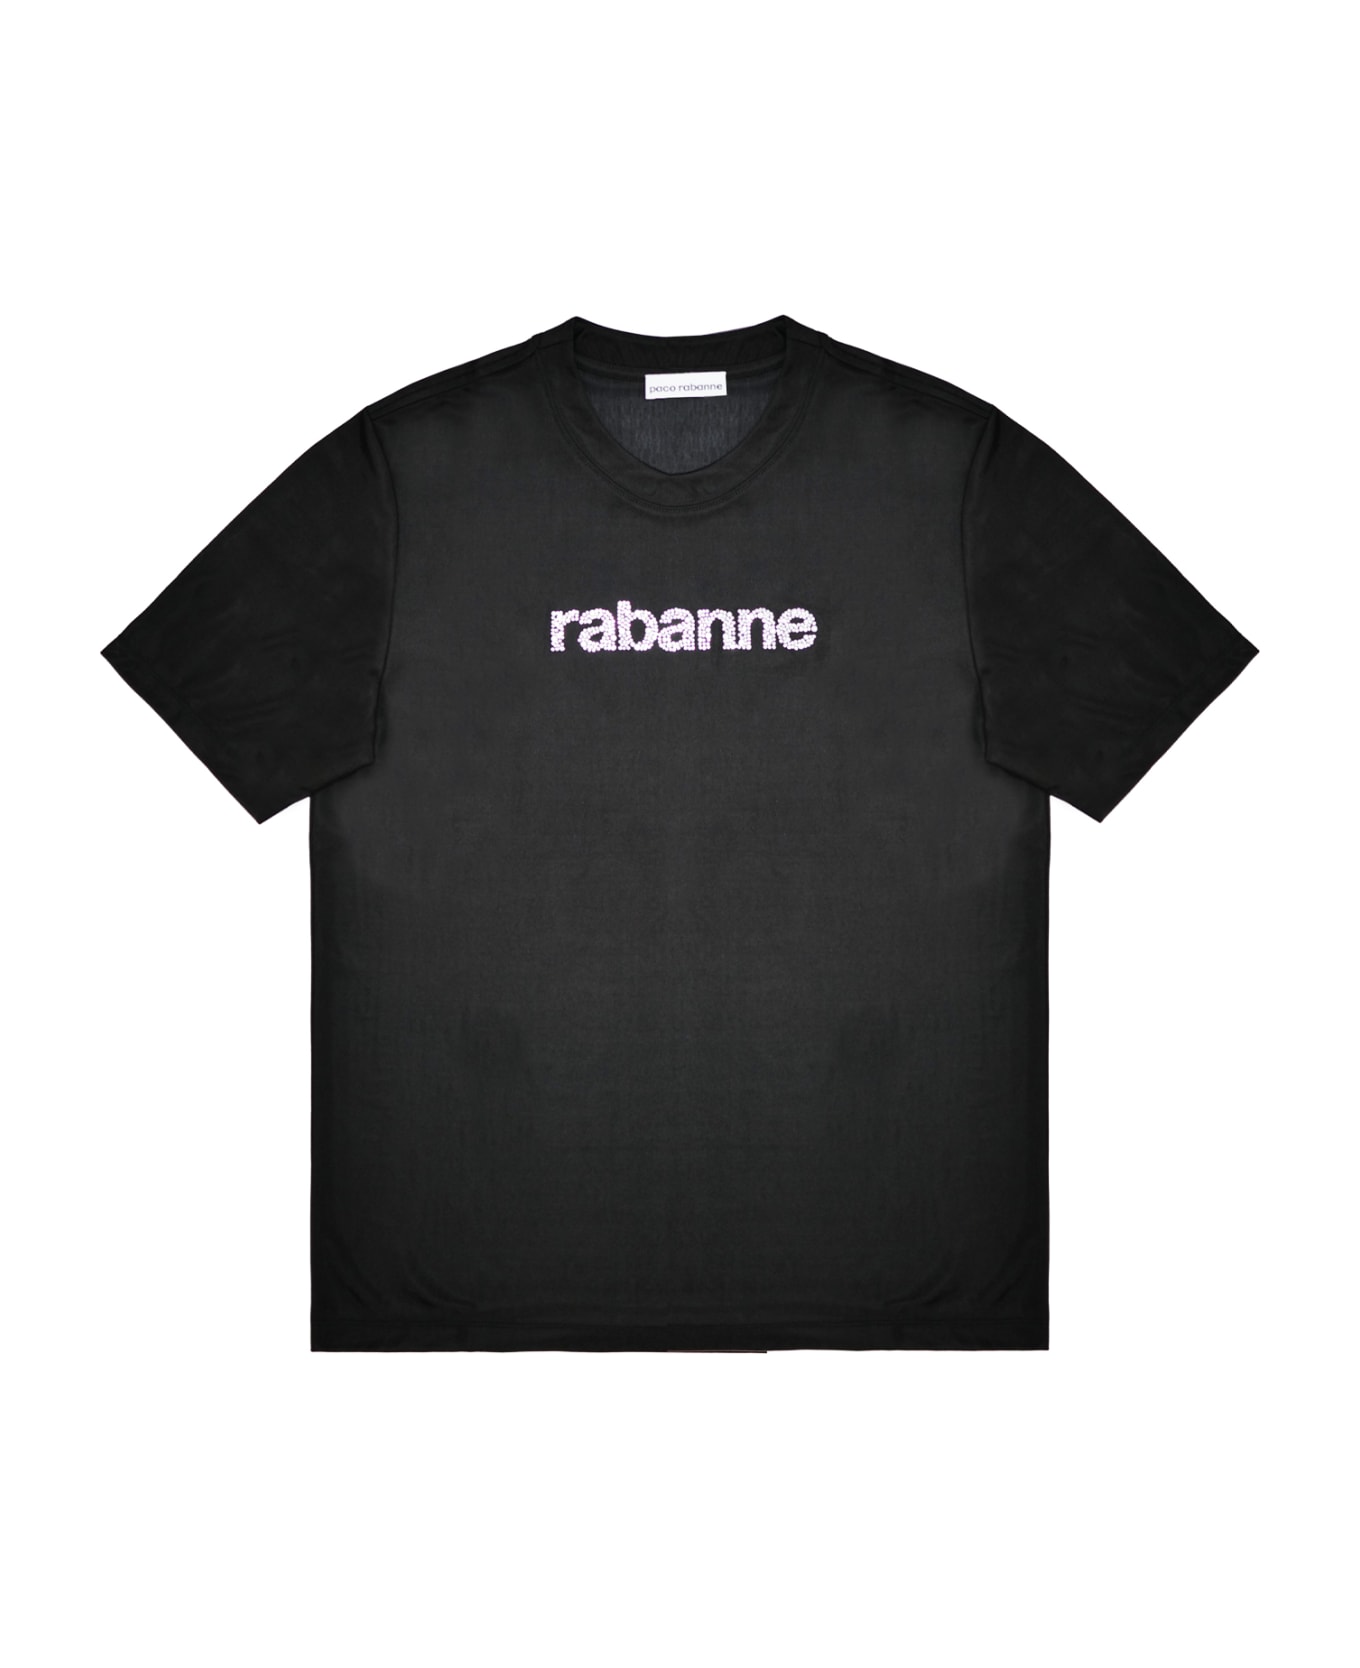 Paco Rabanne T-shirt